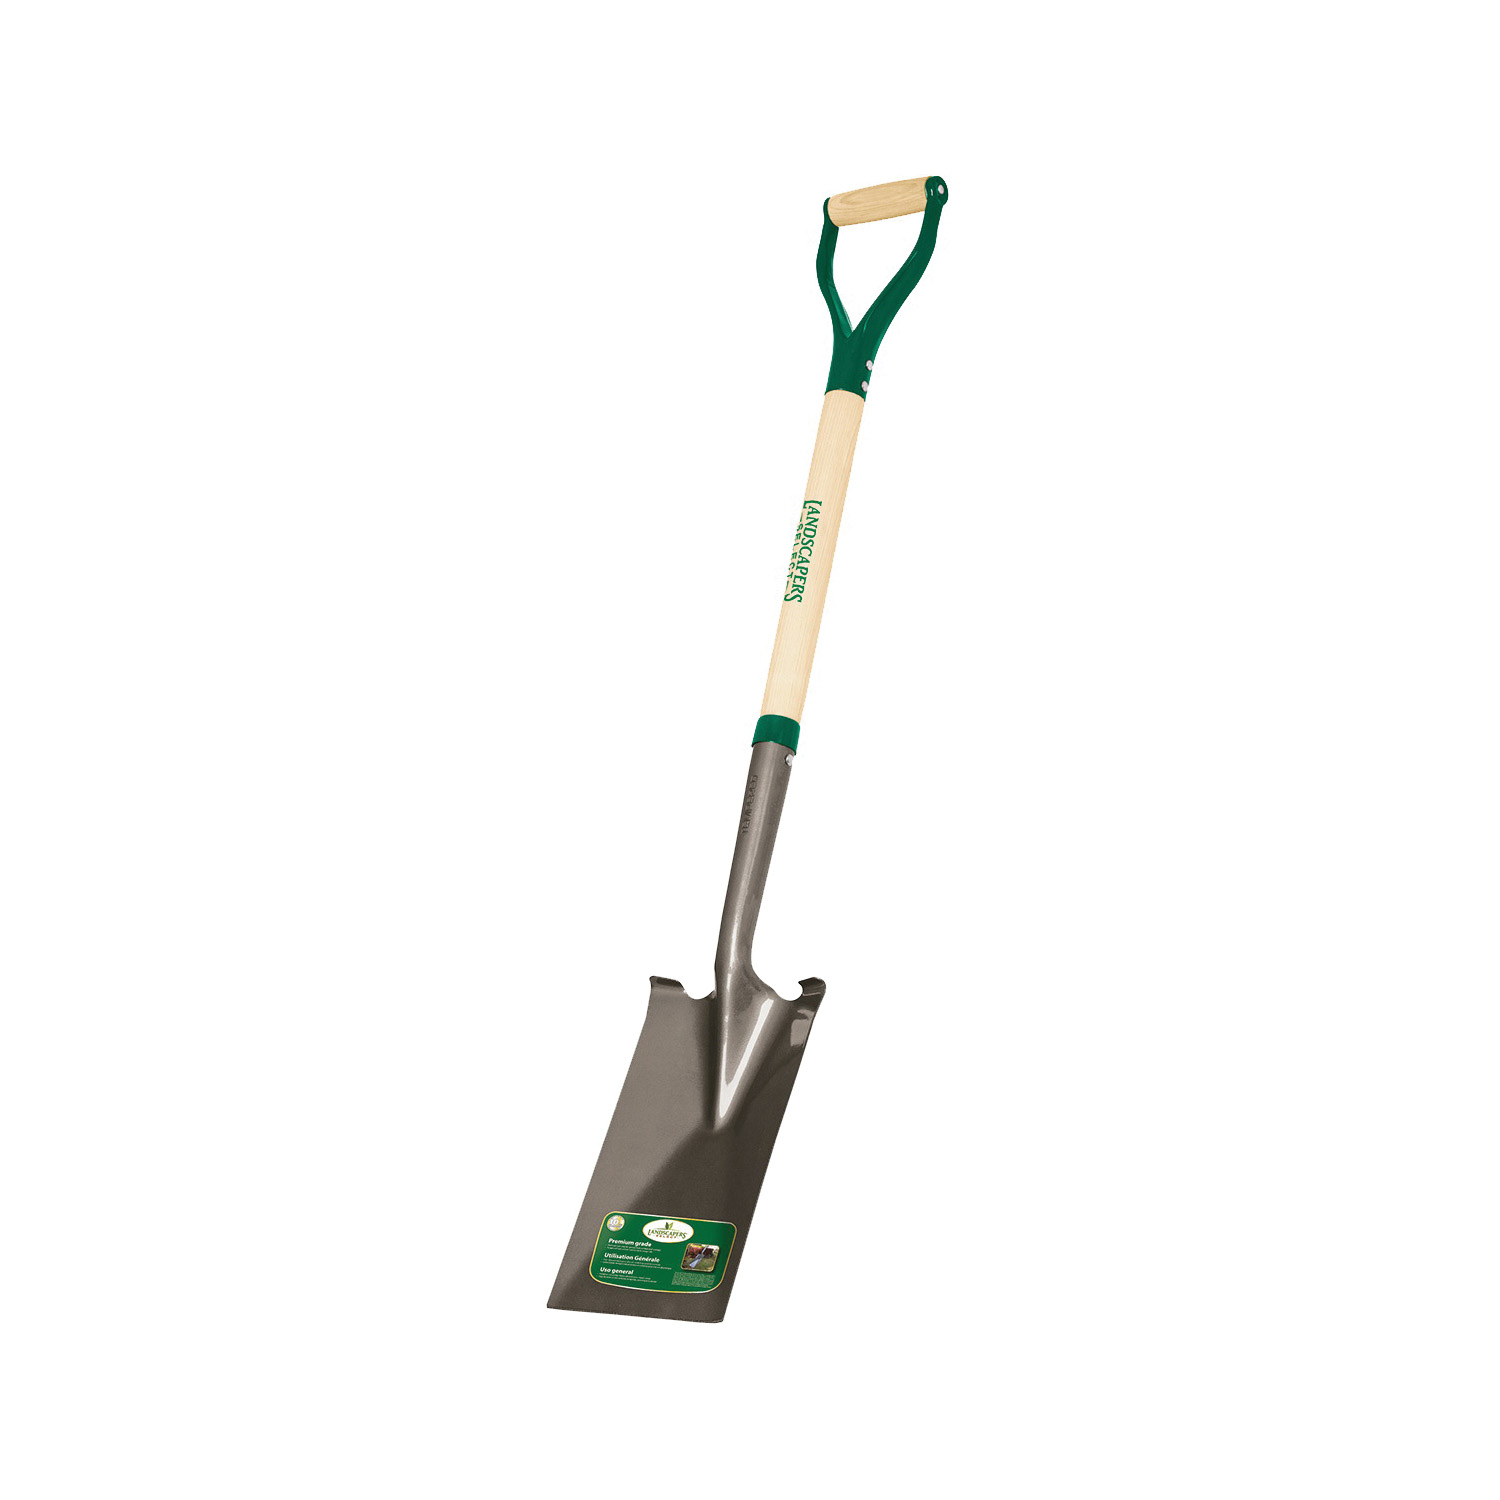 34595 Garden Spade Shovel, 7 in W Blade, Steel Blade, Wood Handle, D-Shaped Handle, 30 in L Handle